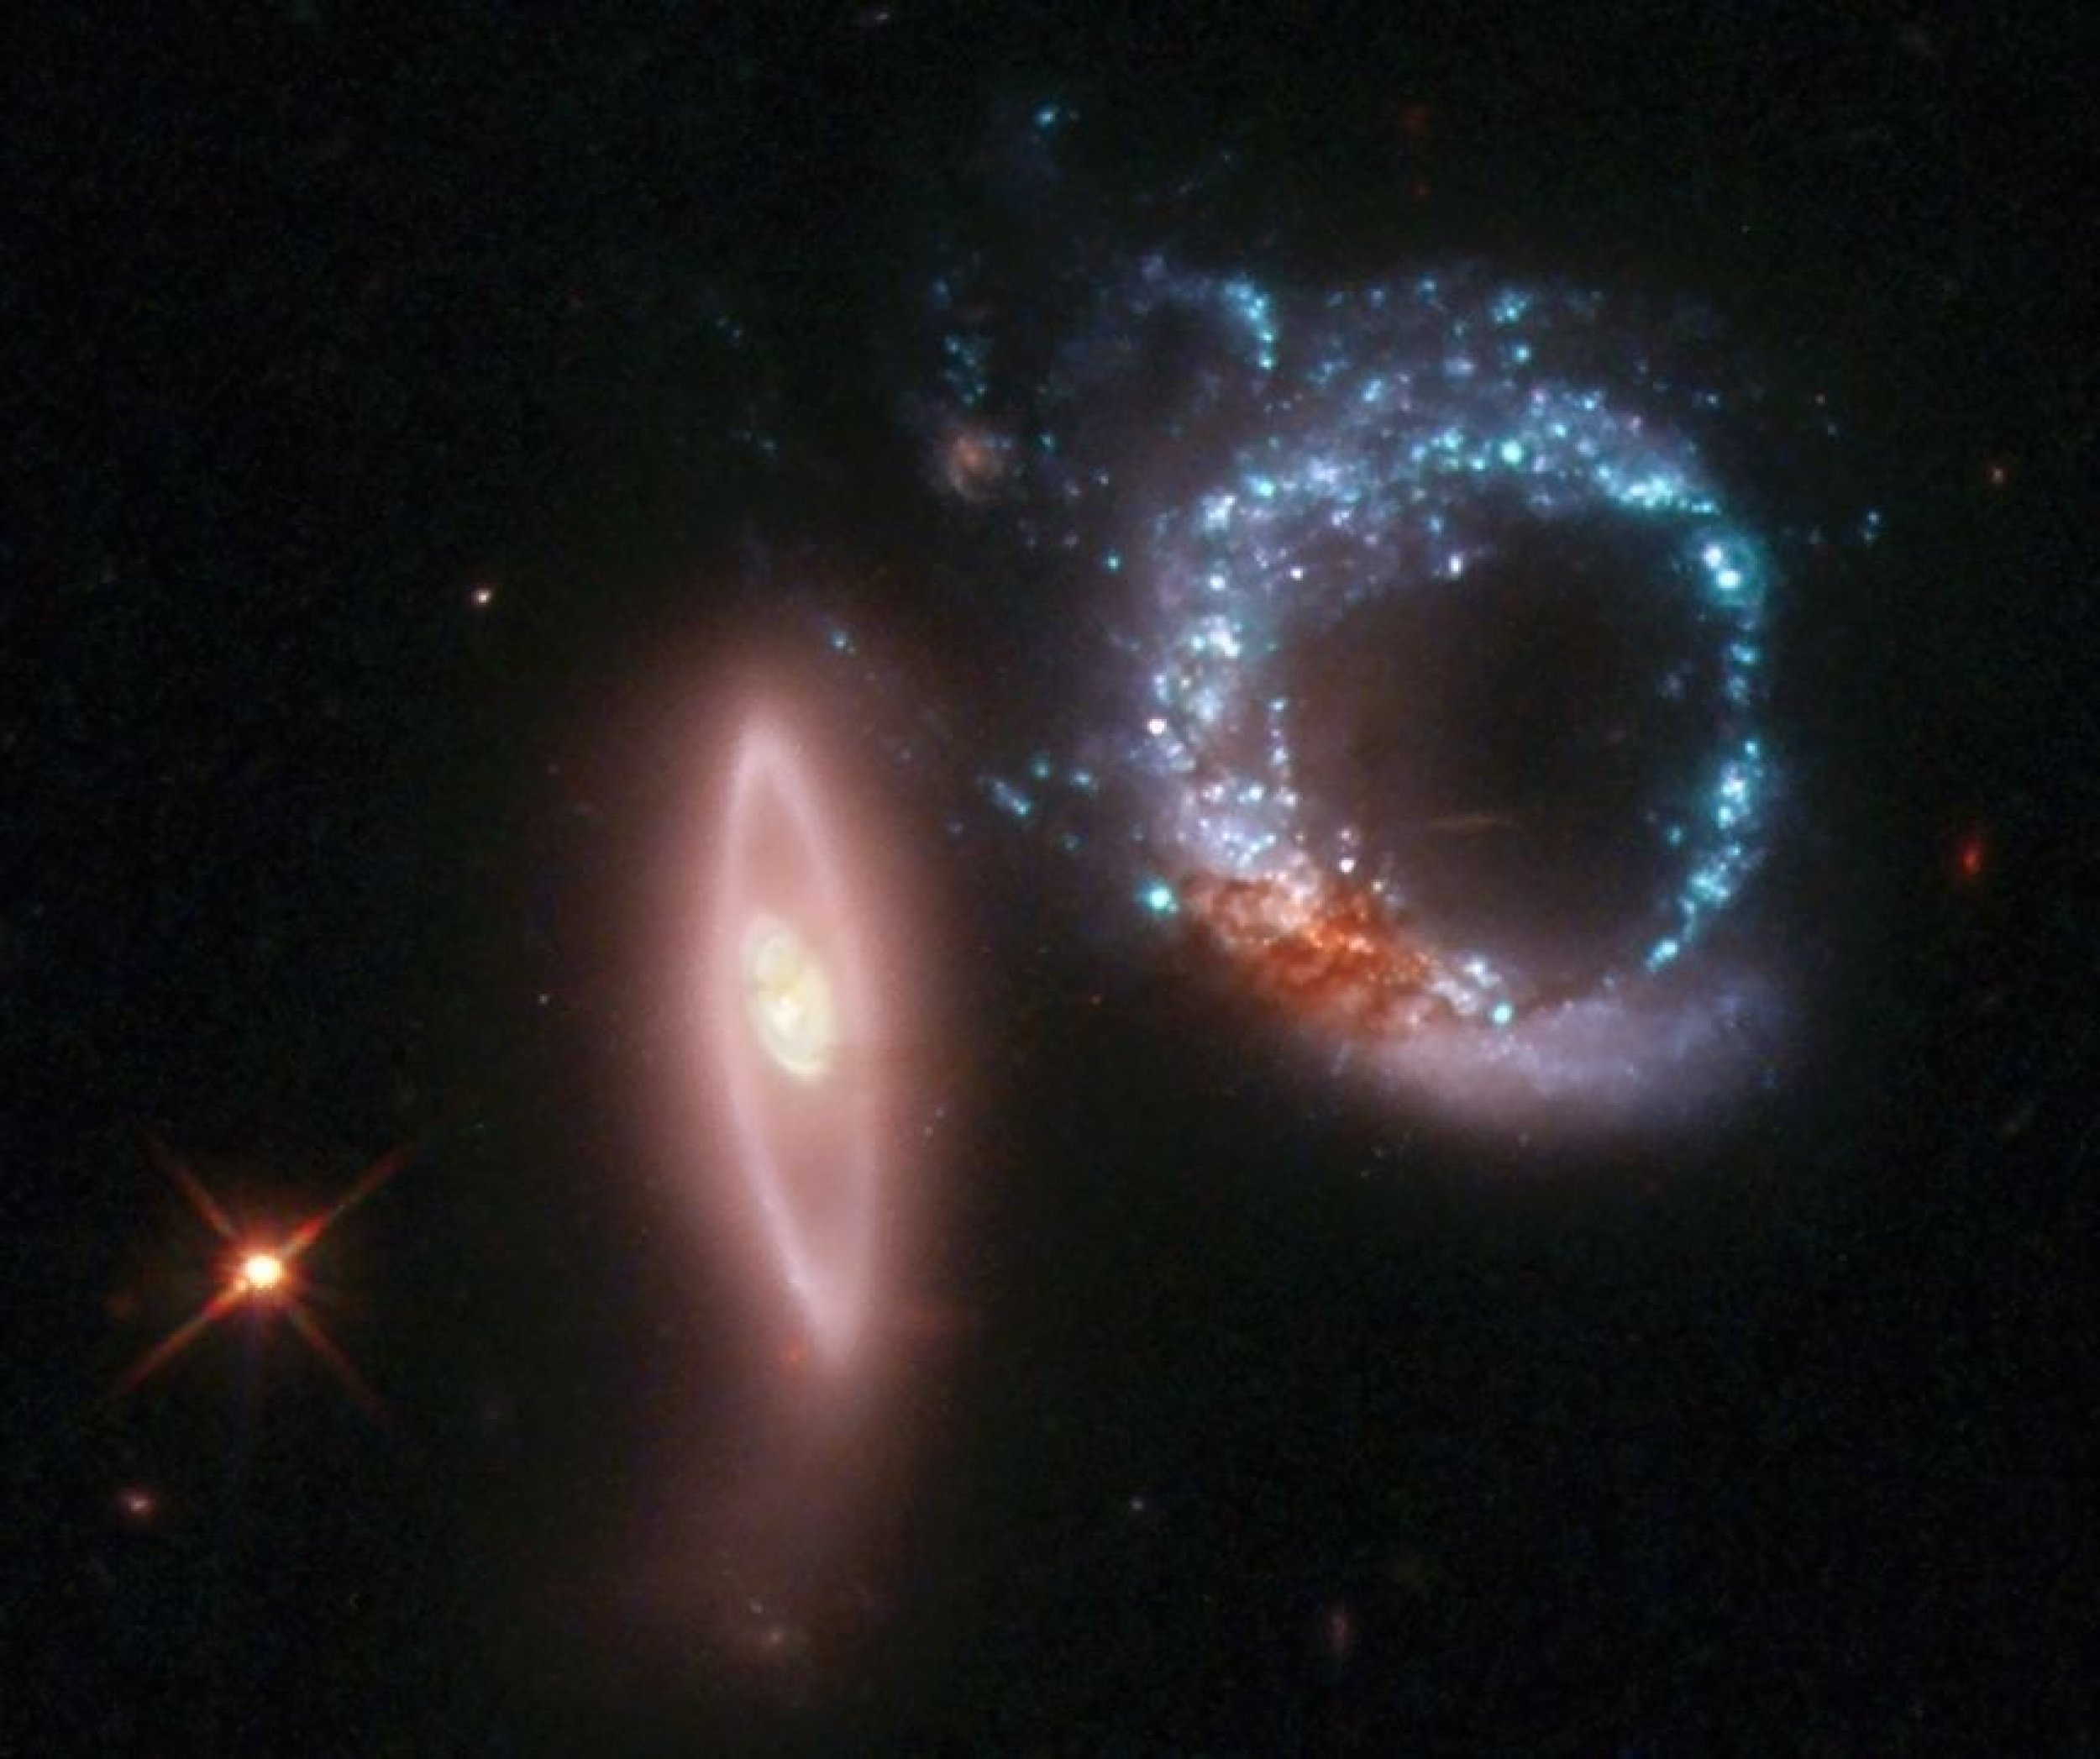 NASAs Hubble Space Telescope